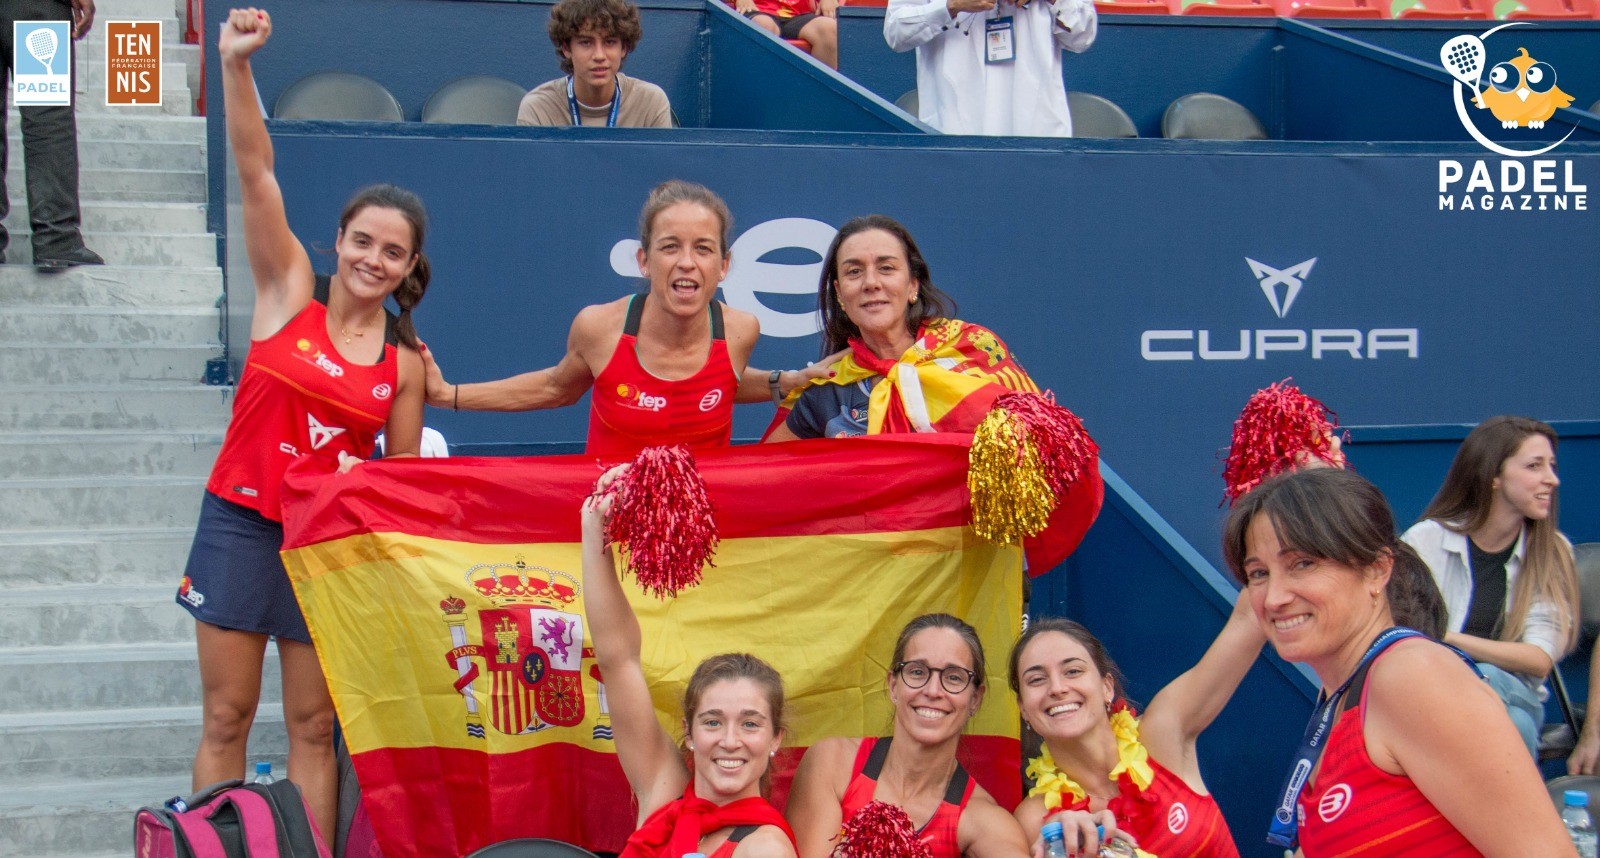 Le padel "Spis" tennis i Spanien